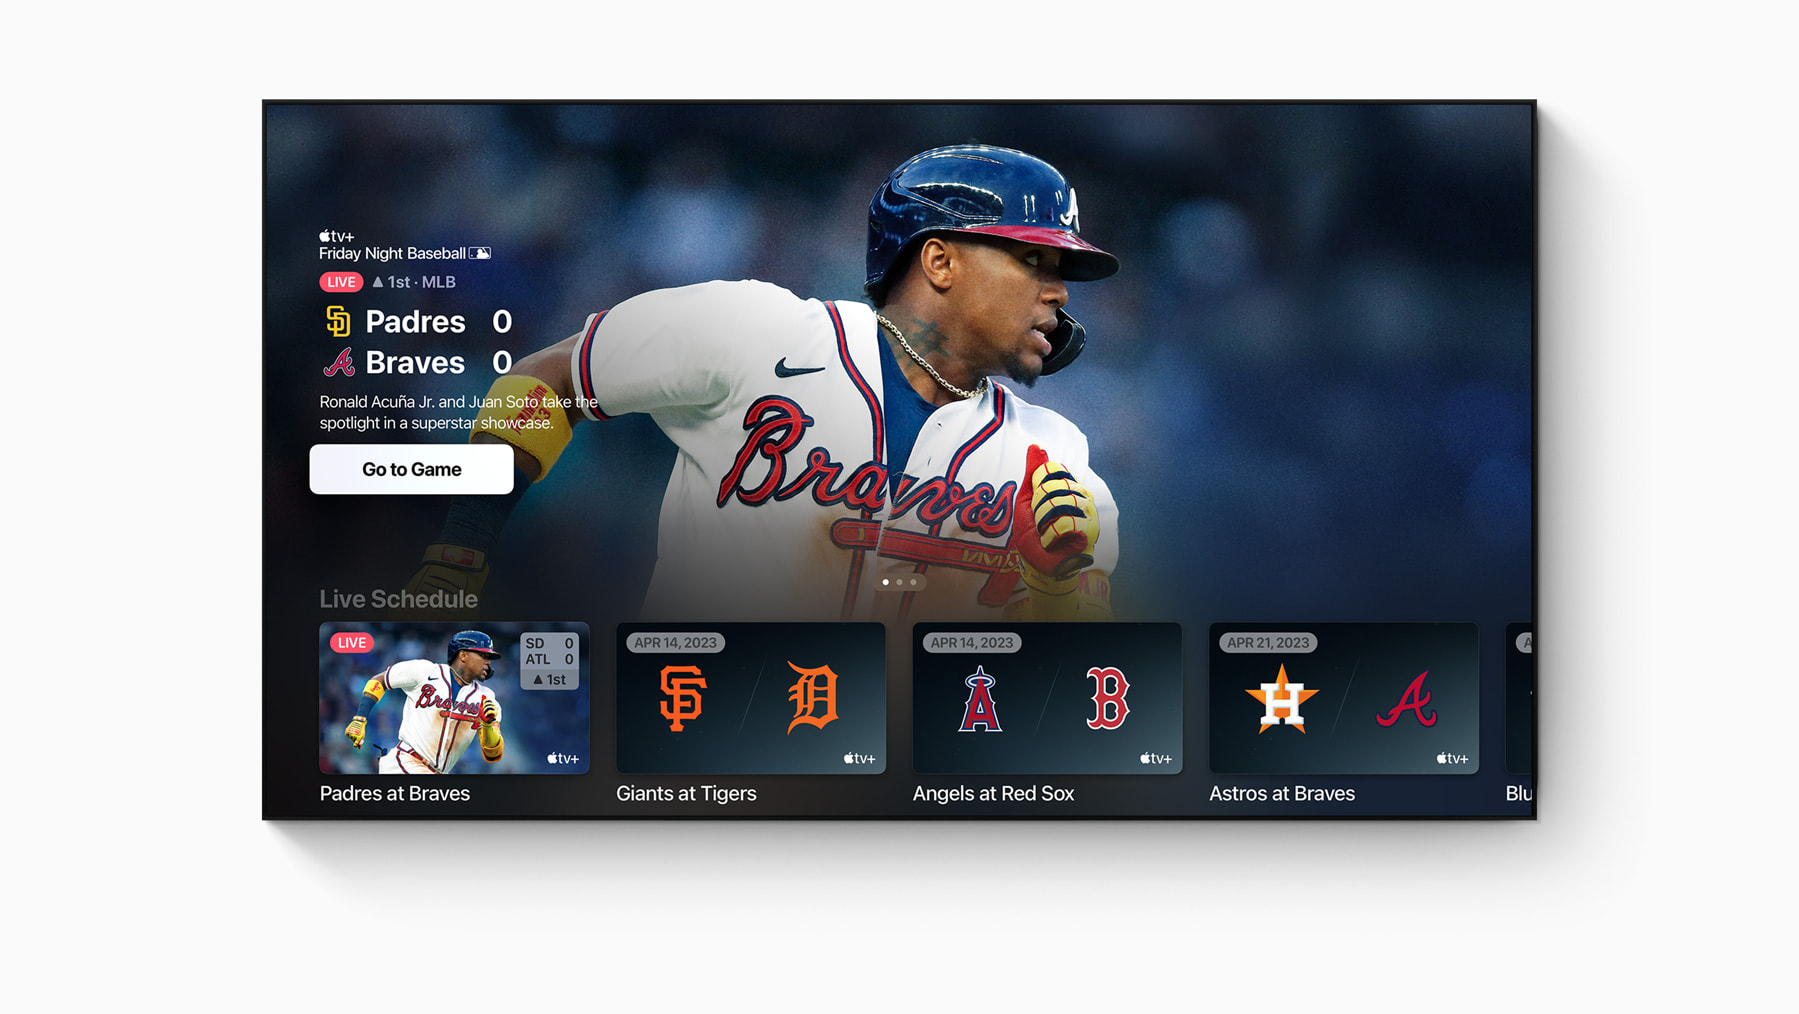 Friday Night Baseball” resumes on Apple TV+ on April 7 - Apple